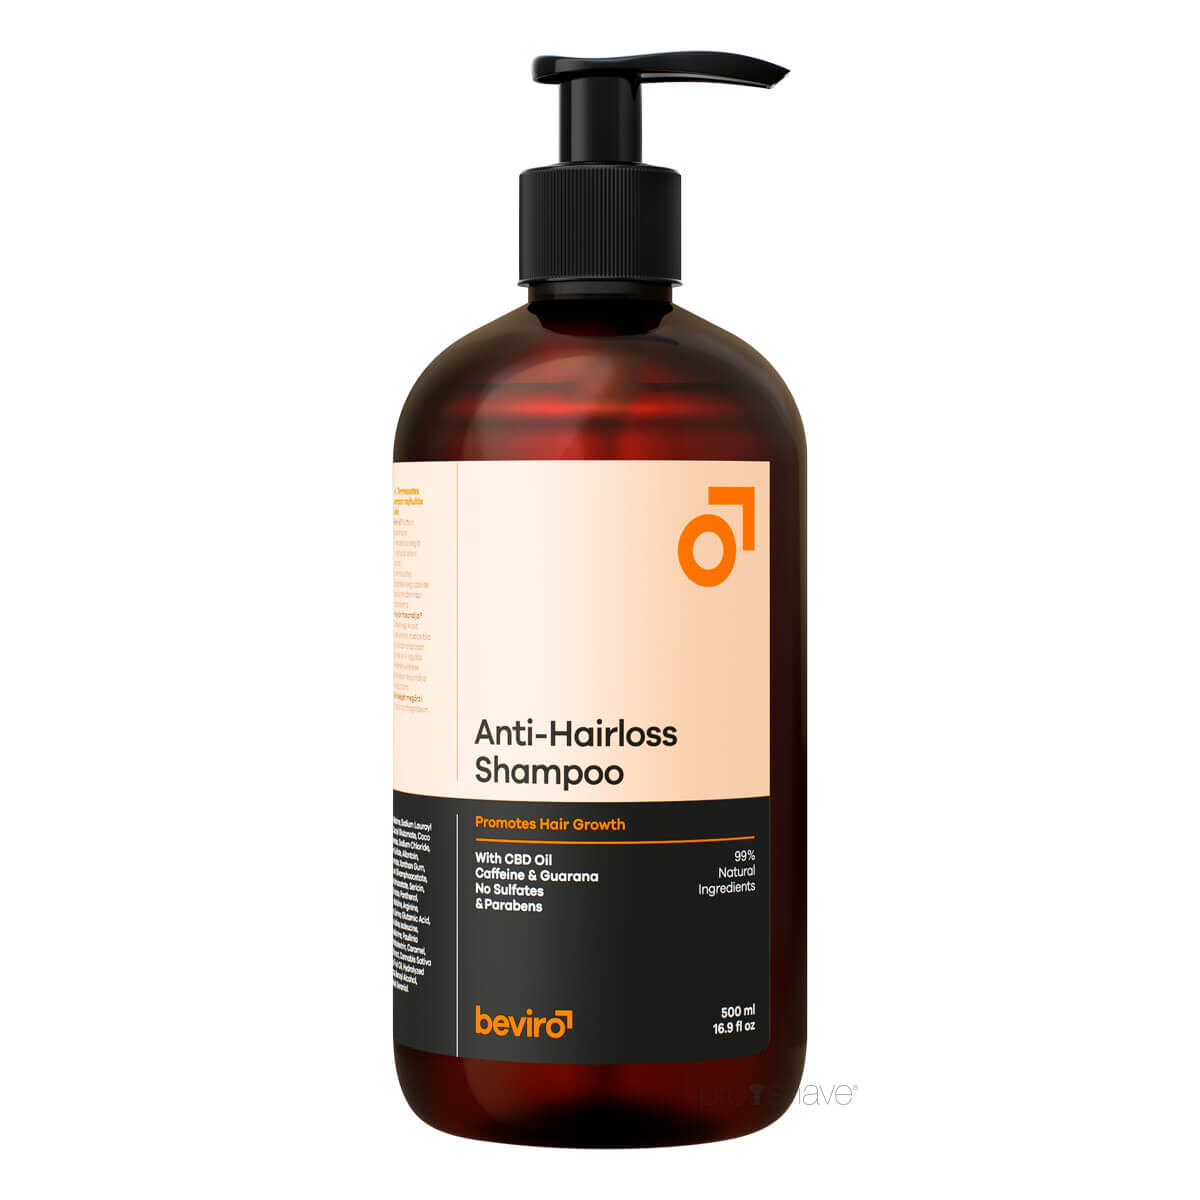 Billede af Beviro Anti-Hairloss Shampoo, 500 ml.